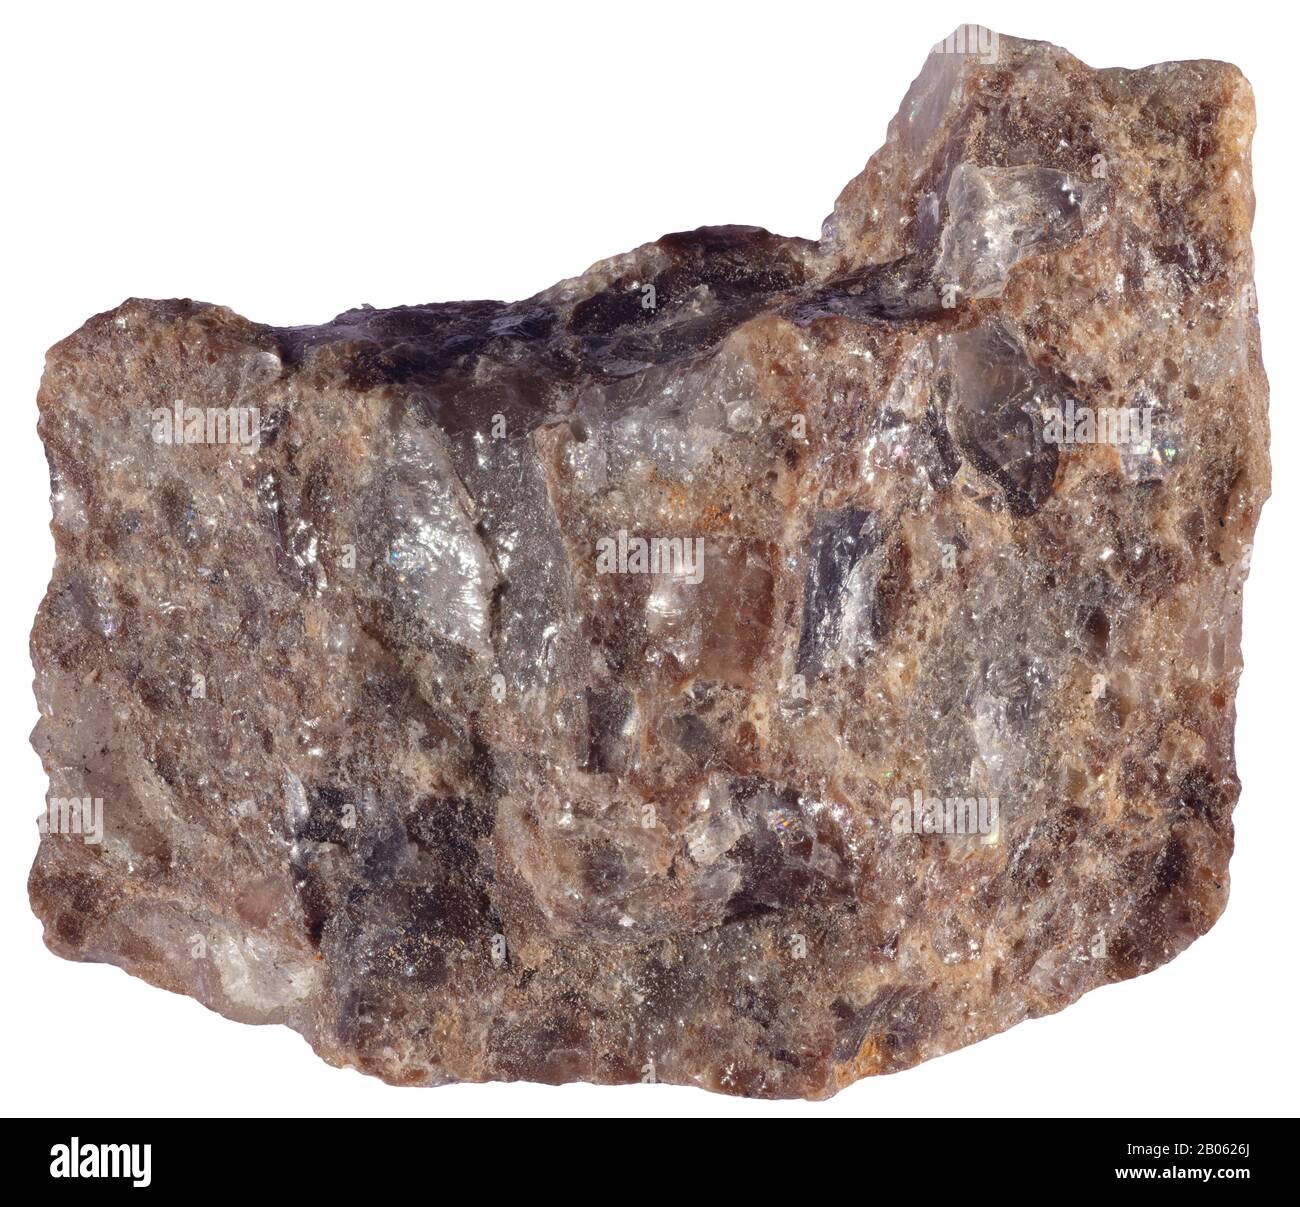 Alaskite O Leucogranito, New Liskeard, Ontario Granitica, Igneous Rock Foto Stock